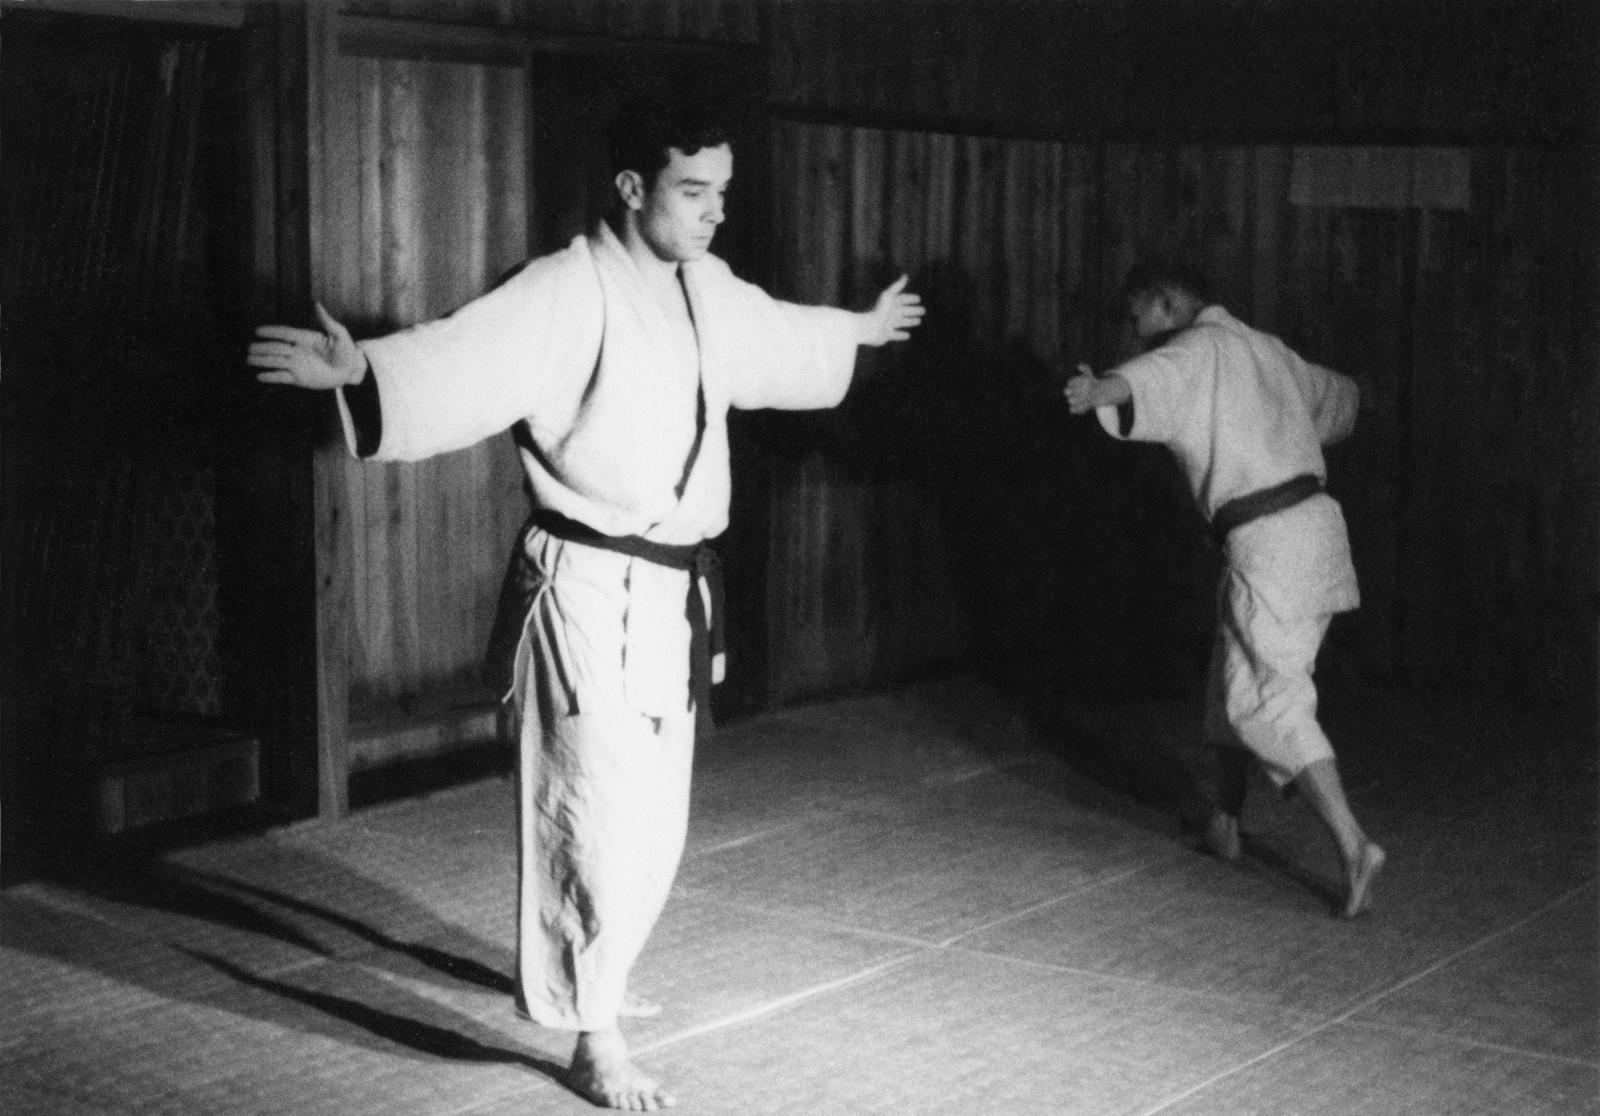 Maître Jô.in Oda et Yves Klein effectuant le Itsutsu-no-kata (Kata des cinq principes), dôjô de Maître Oda